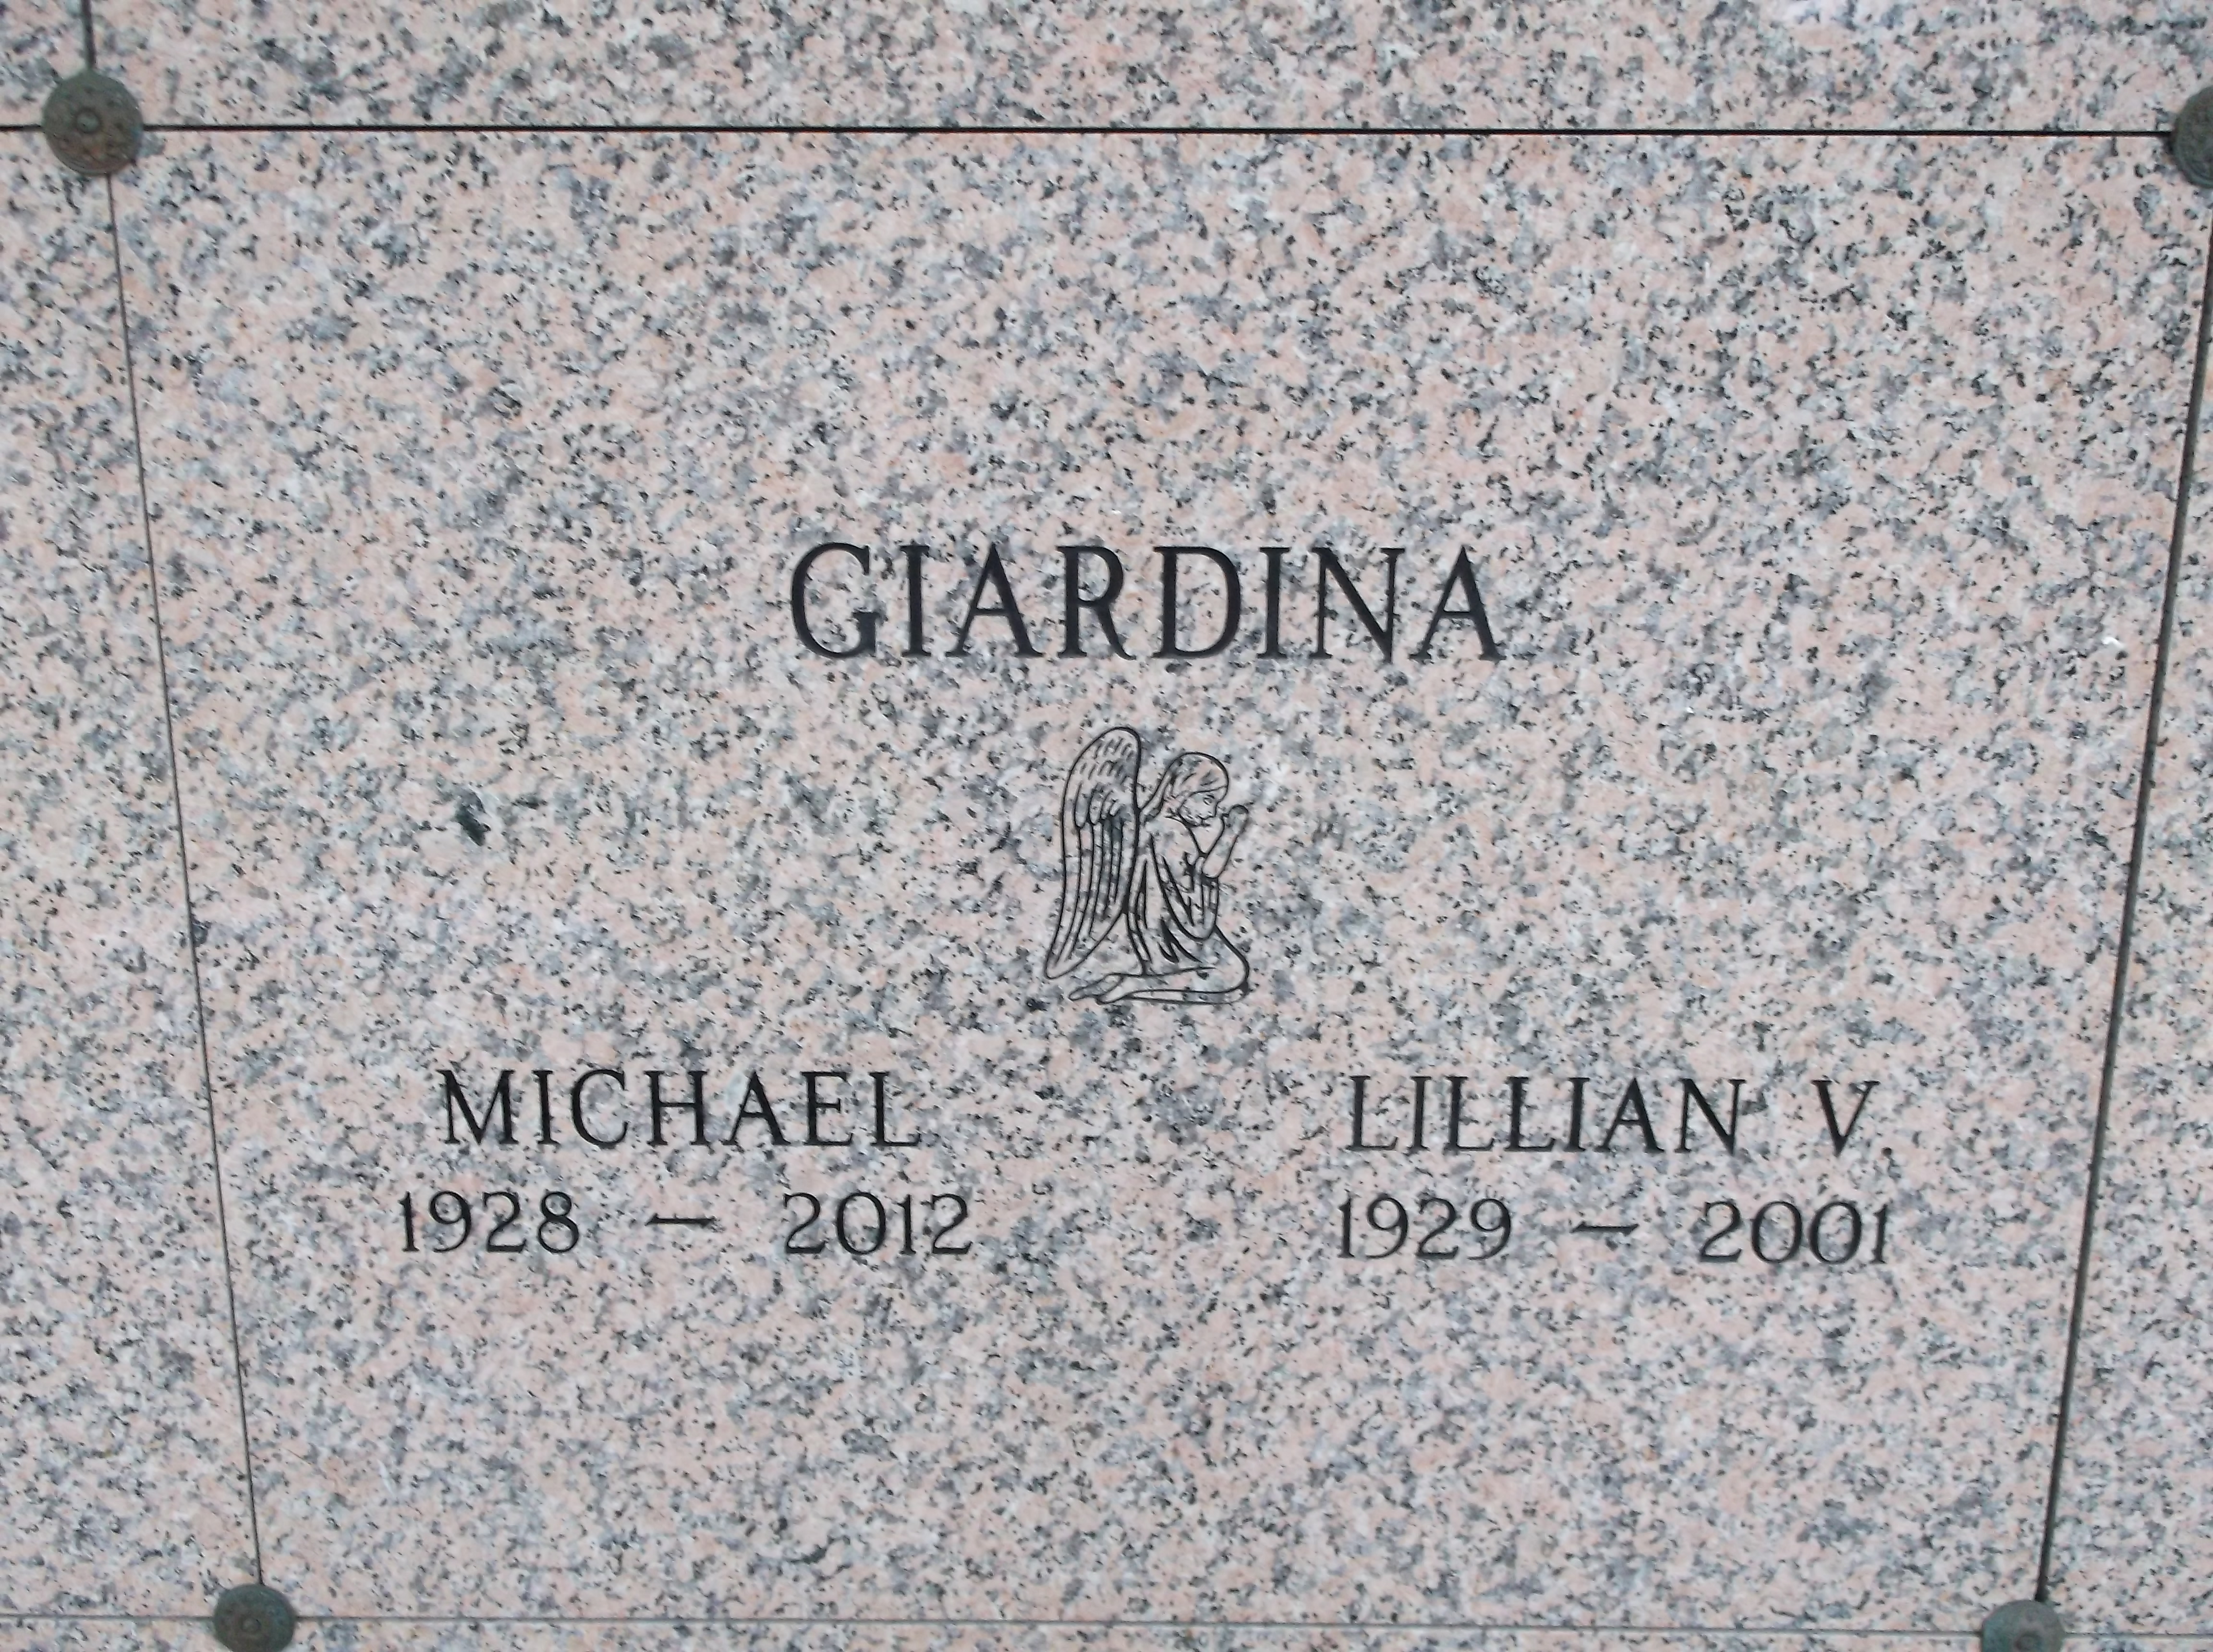 Michael Giardina